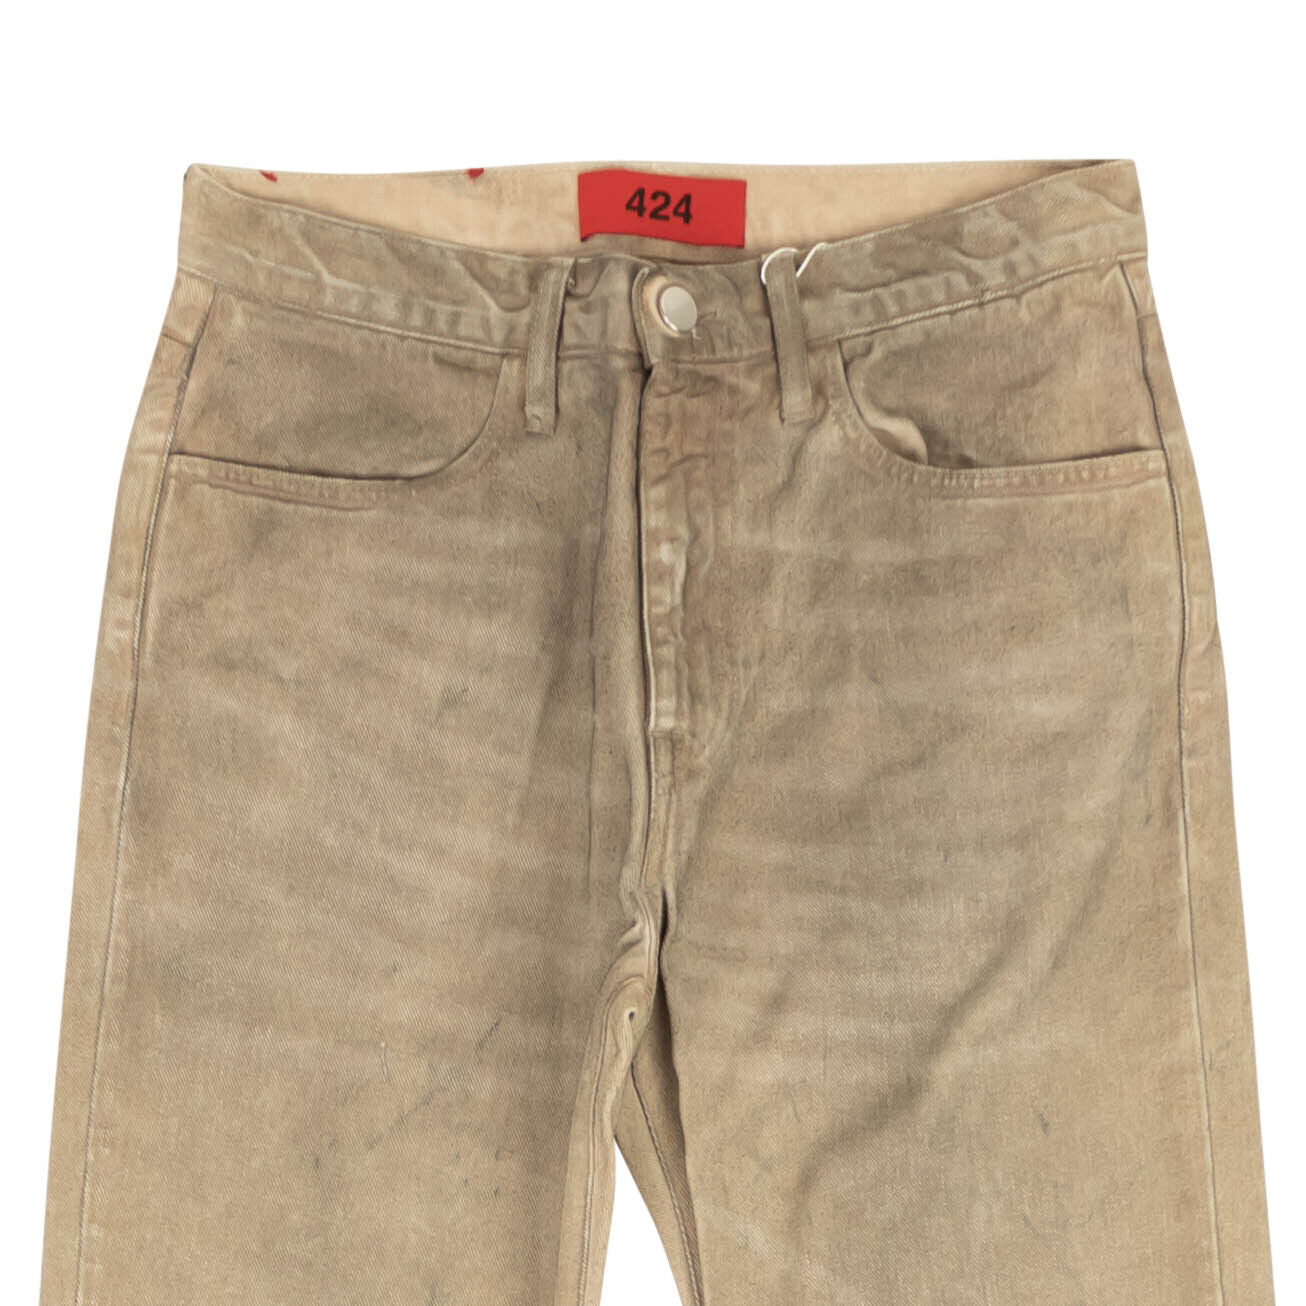 424 On Fairfax Slim Fit Jeans - Brown